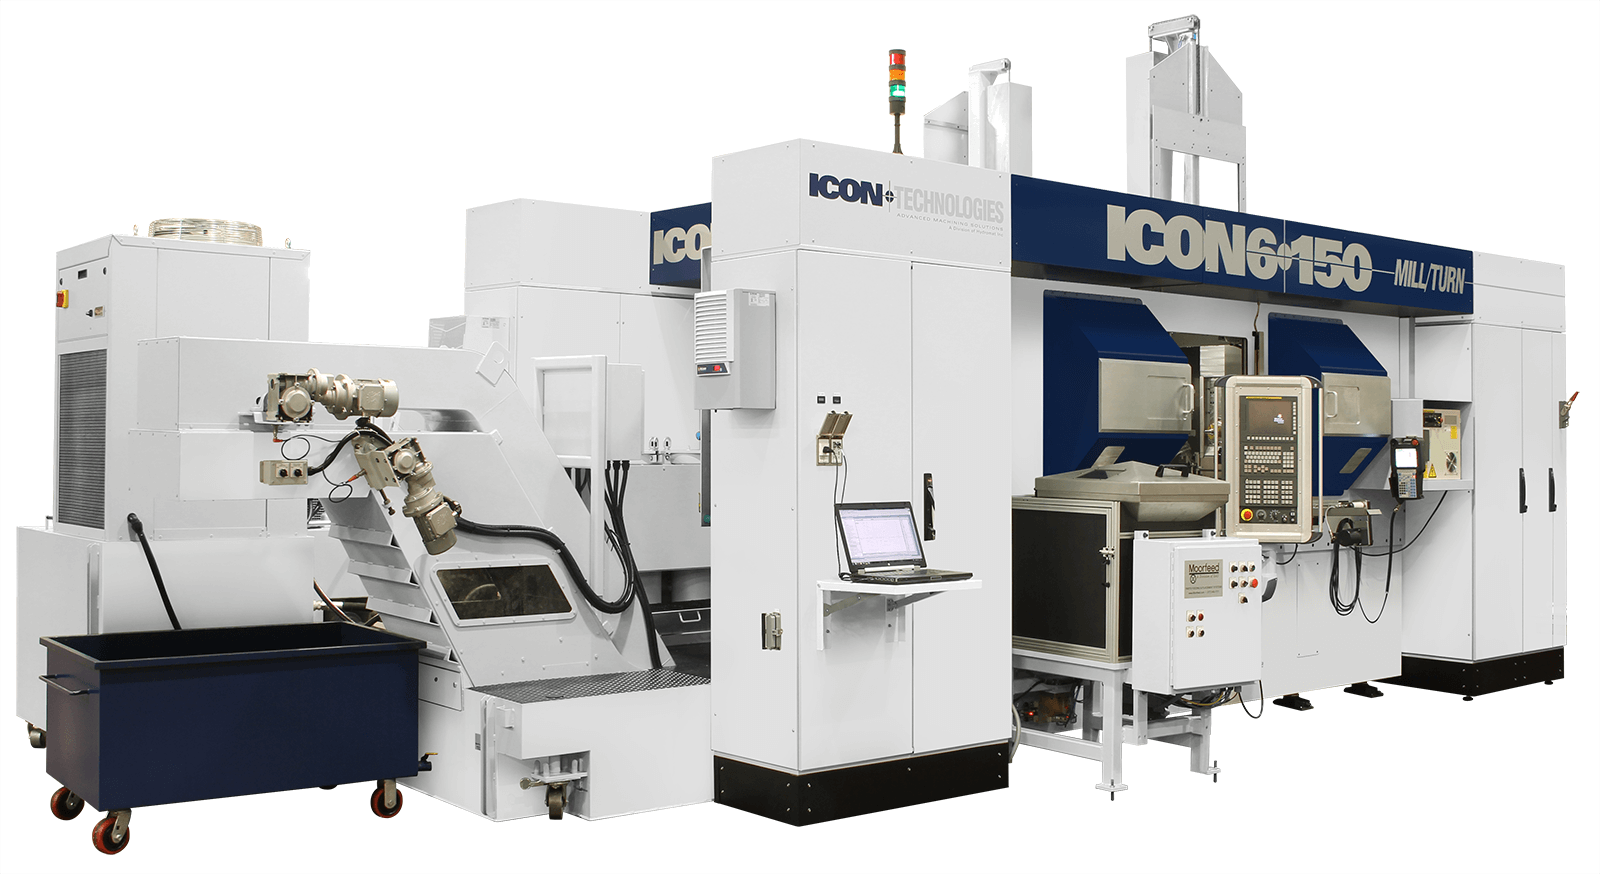 ICON Technolgoies 6-150 Mill/Turn Machine image